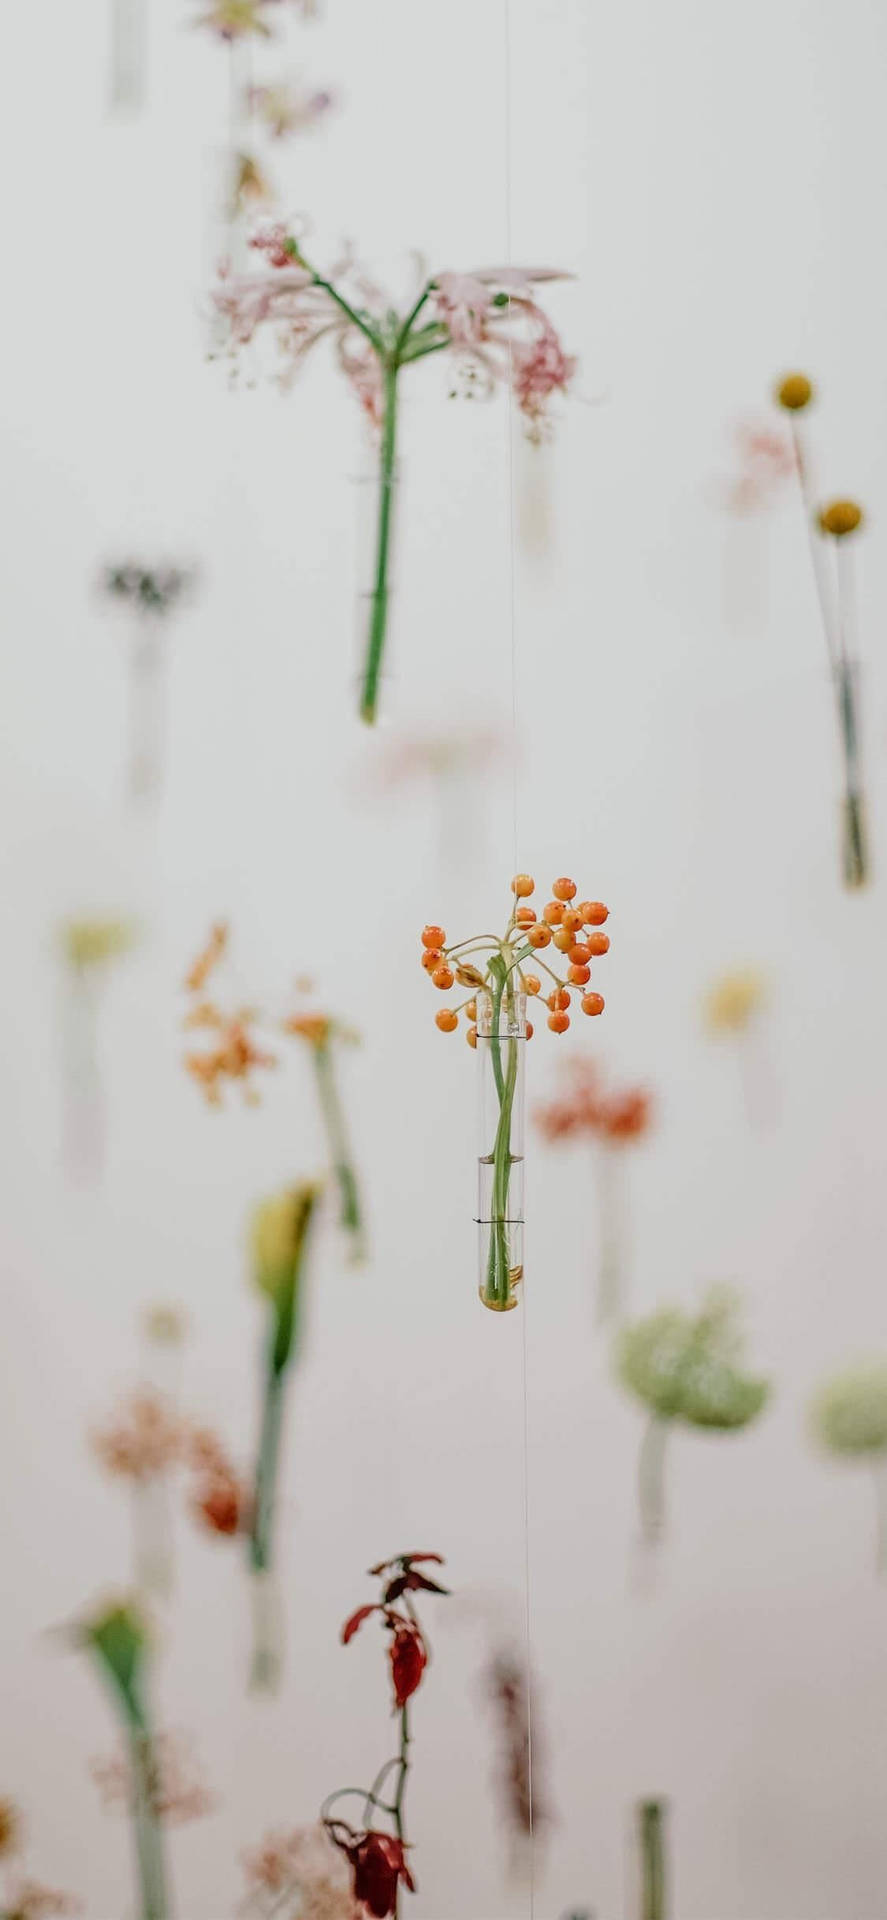 Spring Aesthetic Hanging Flowers Wallpaper